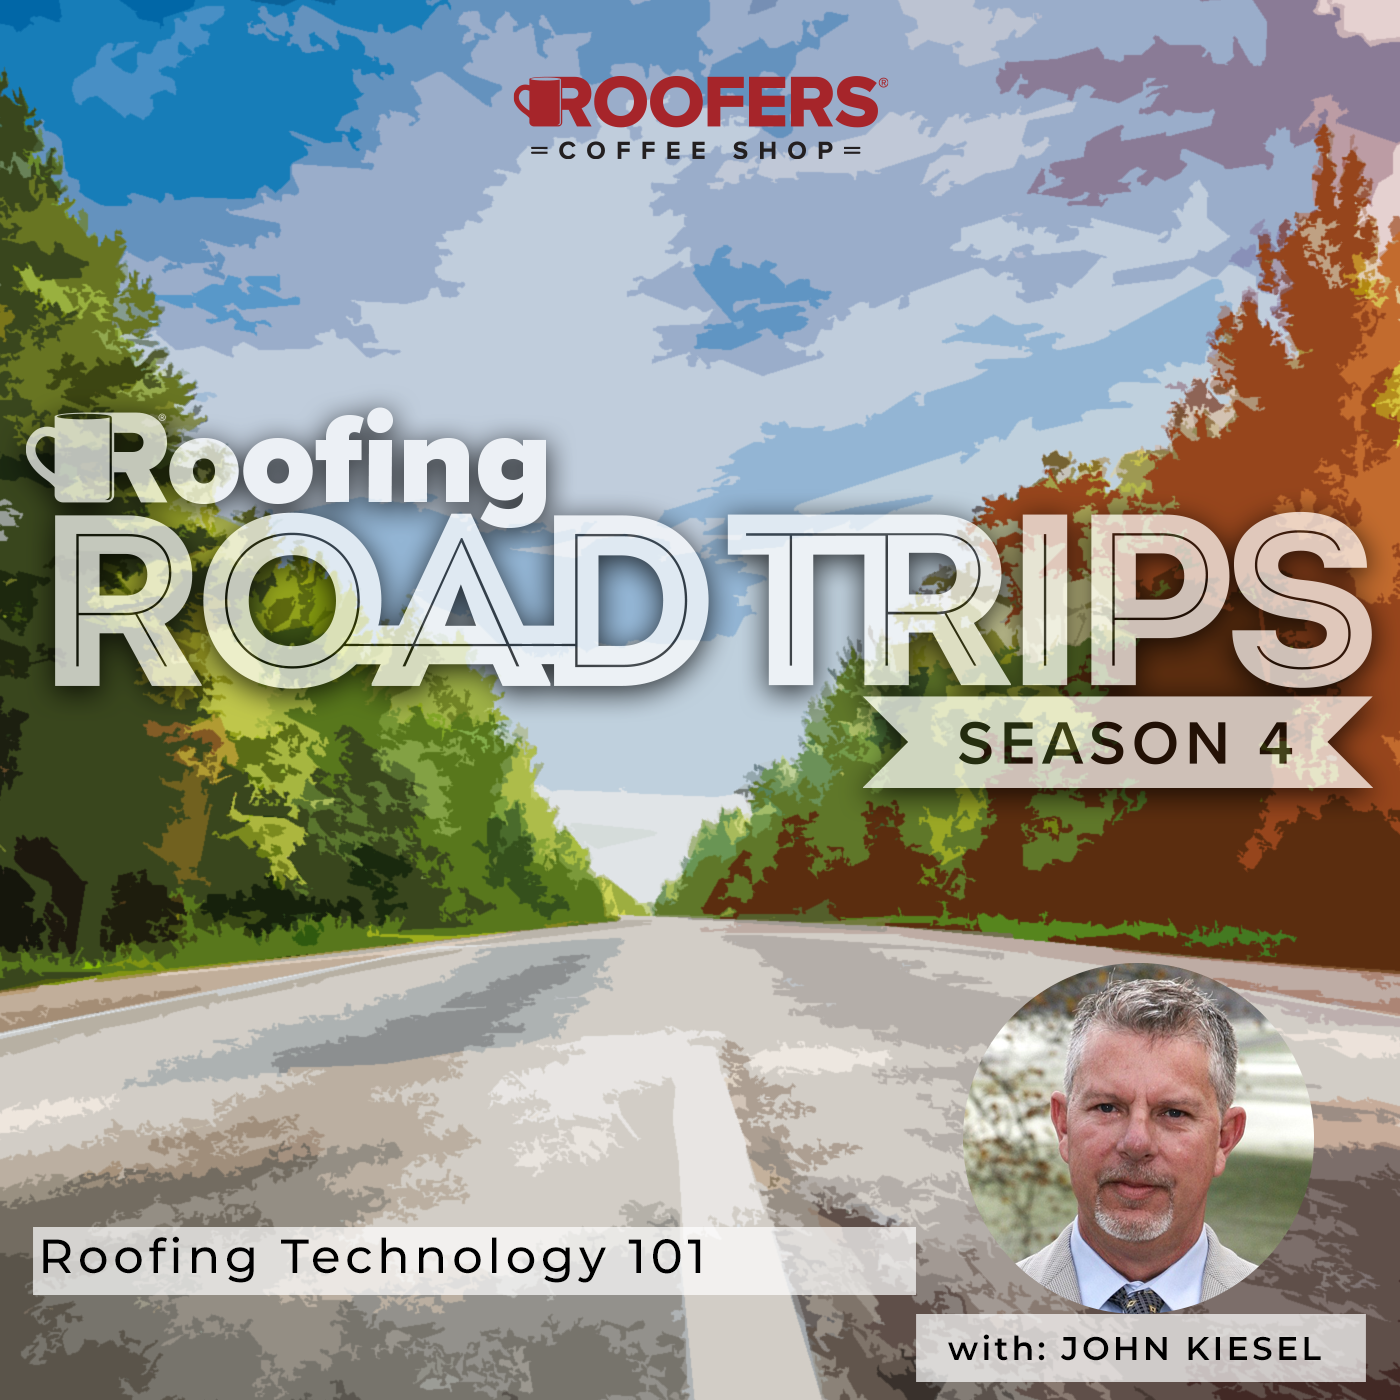 Imagine Technologies - John Kiesel - Roofing Technology 101